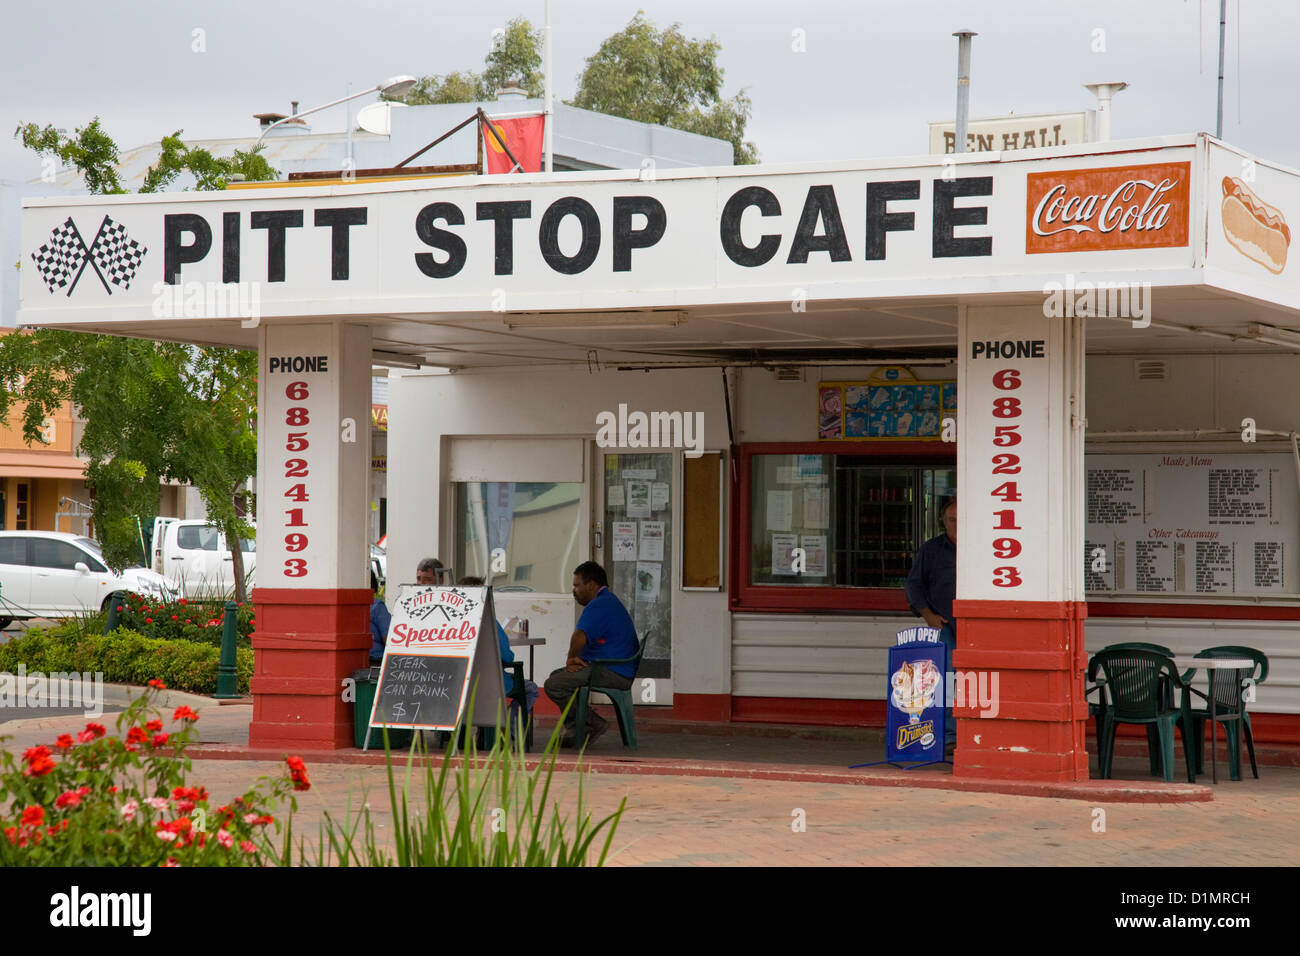 pitt stop cafe in regional new south wales,australia Stock Photo